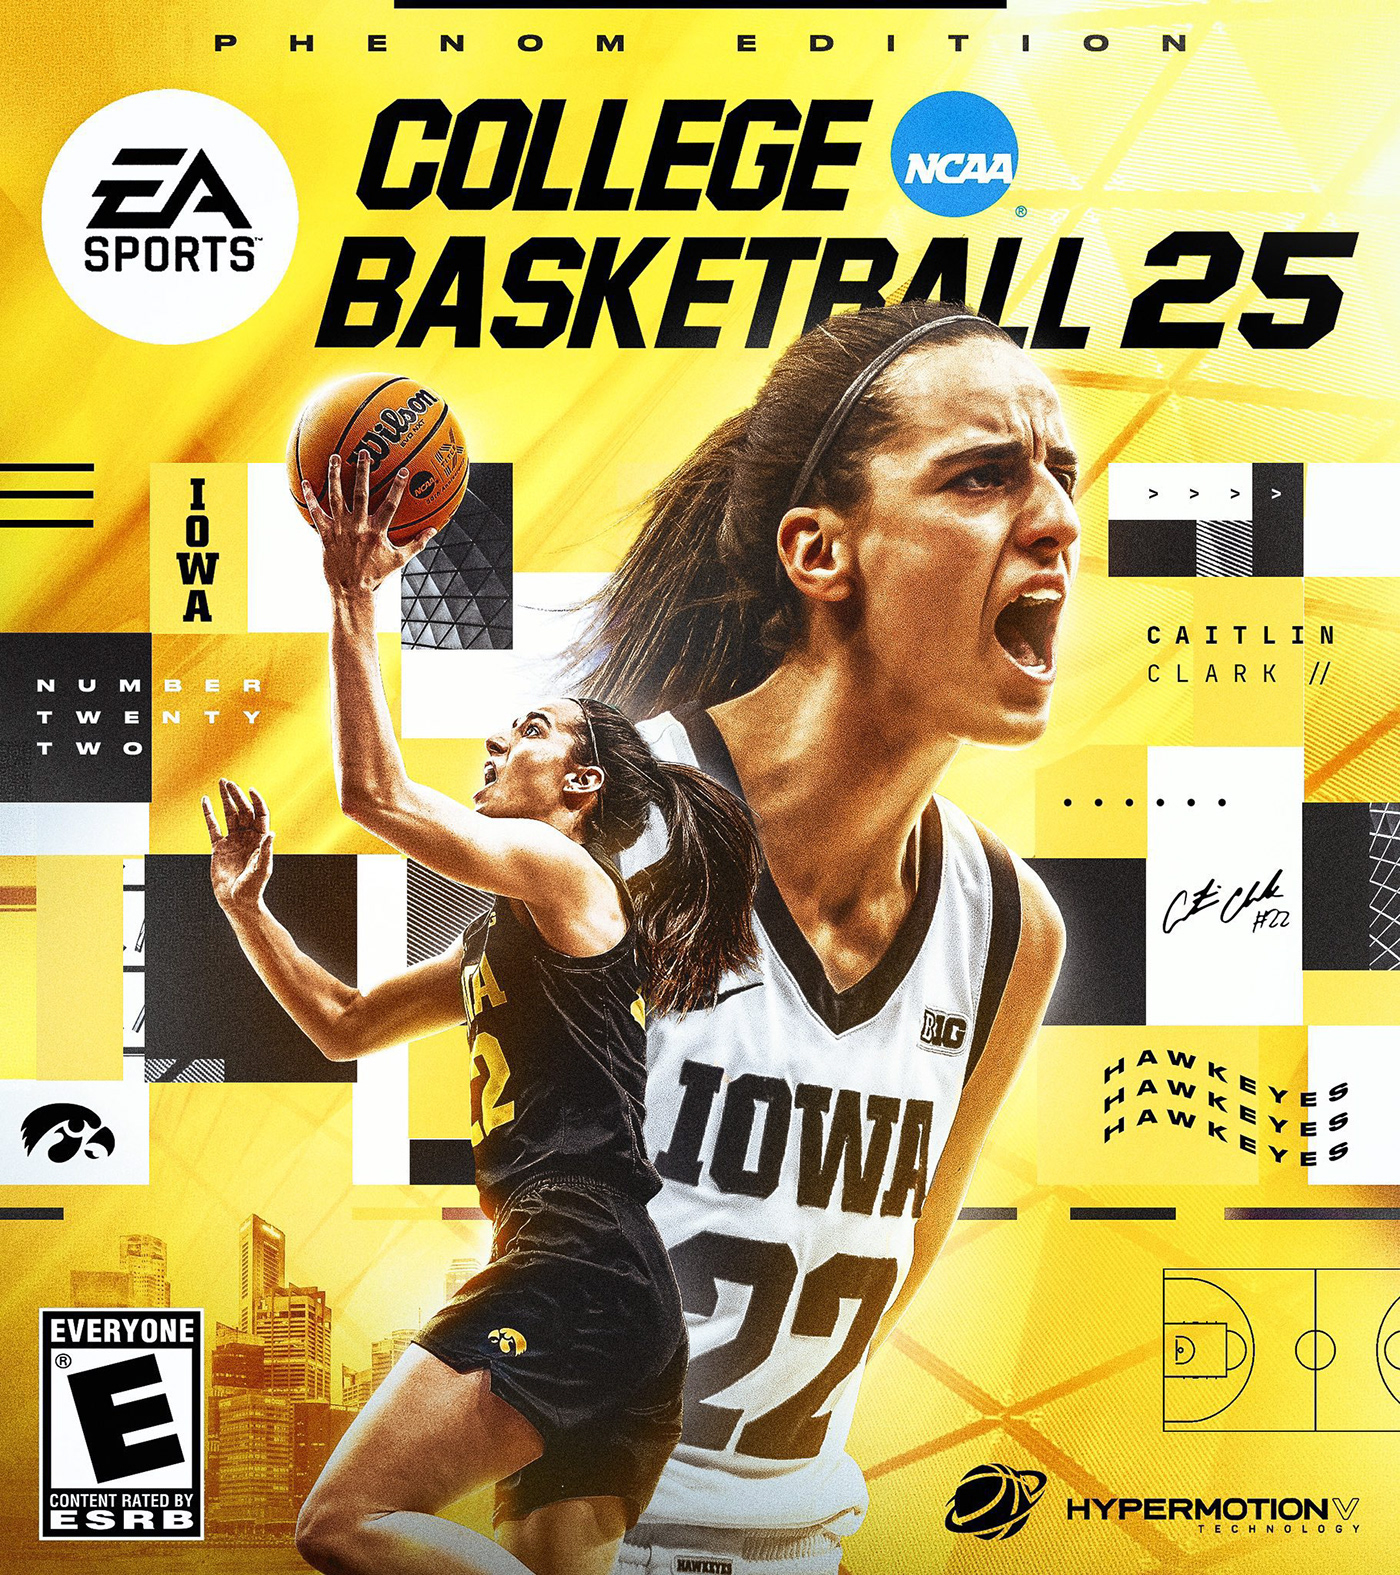 design key art basketball college sports College Basketball Poster Design graphics NBA editorial арт